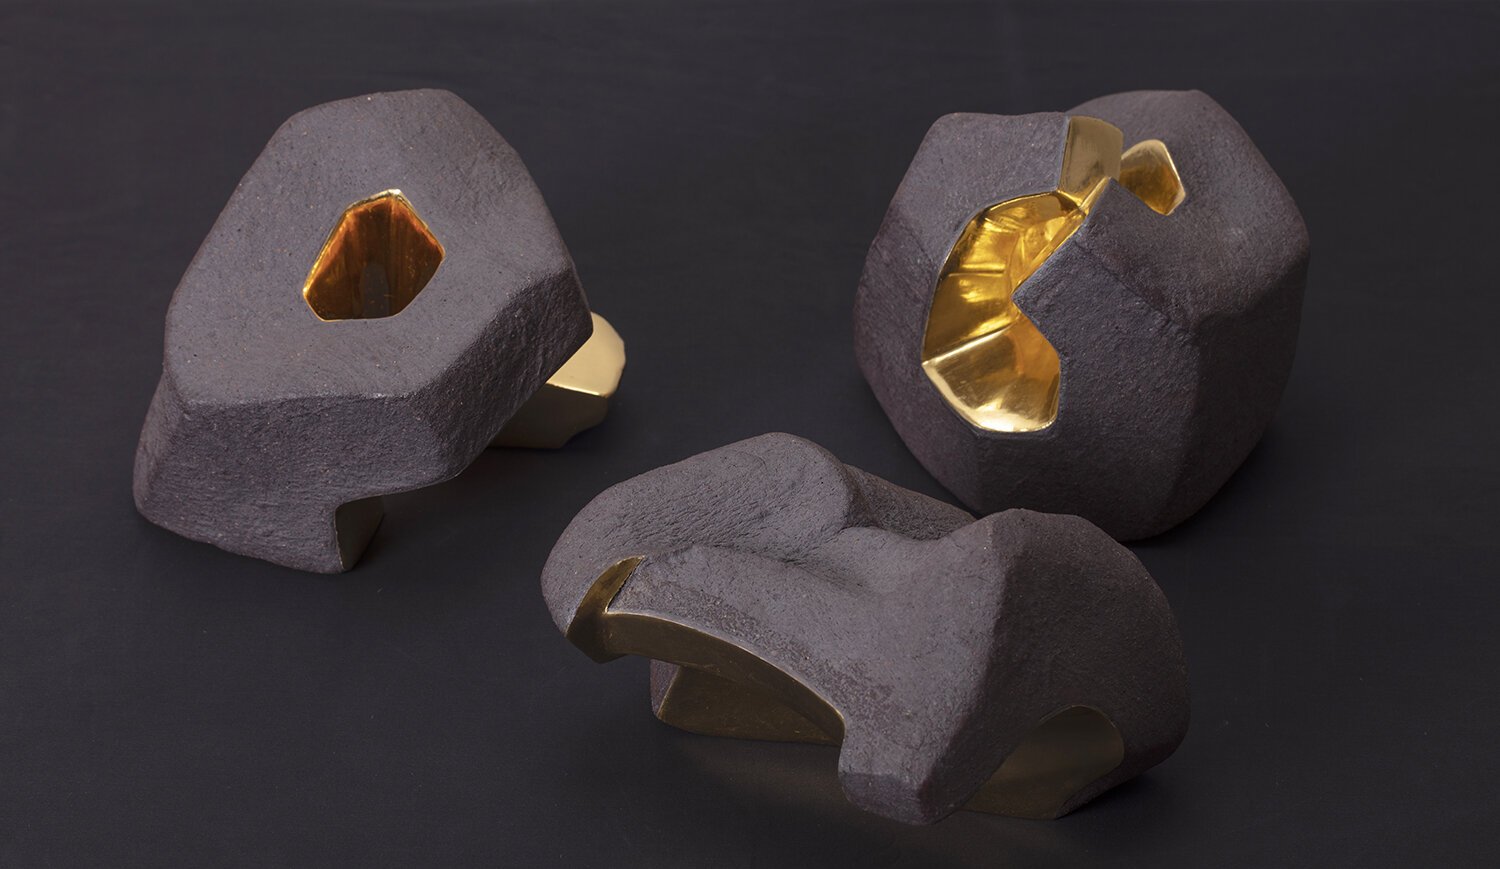 jorge-yazpik-untitled-3-sculptures-all-solid-clay-goldleaf-2020-marion-friedmann-gallery.jpg